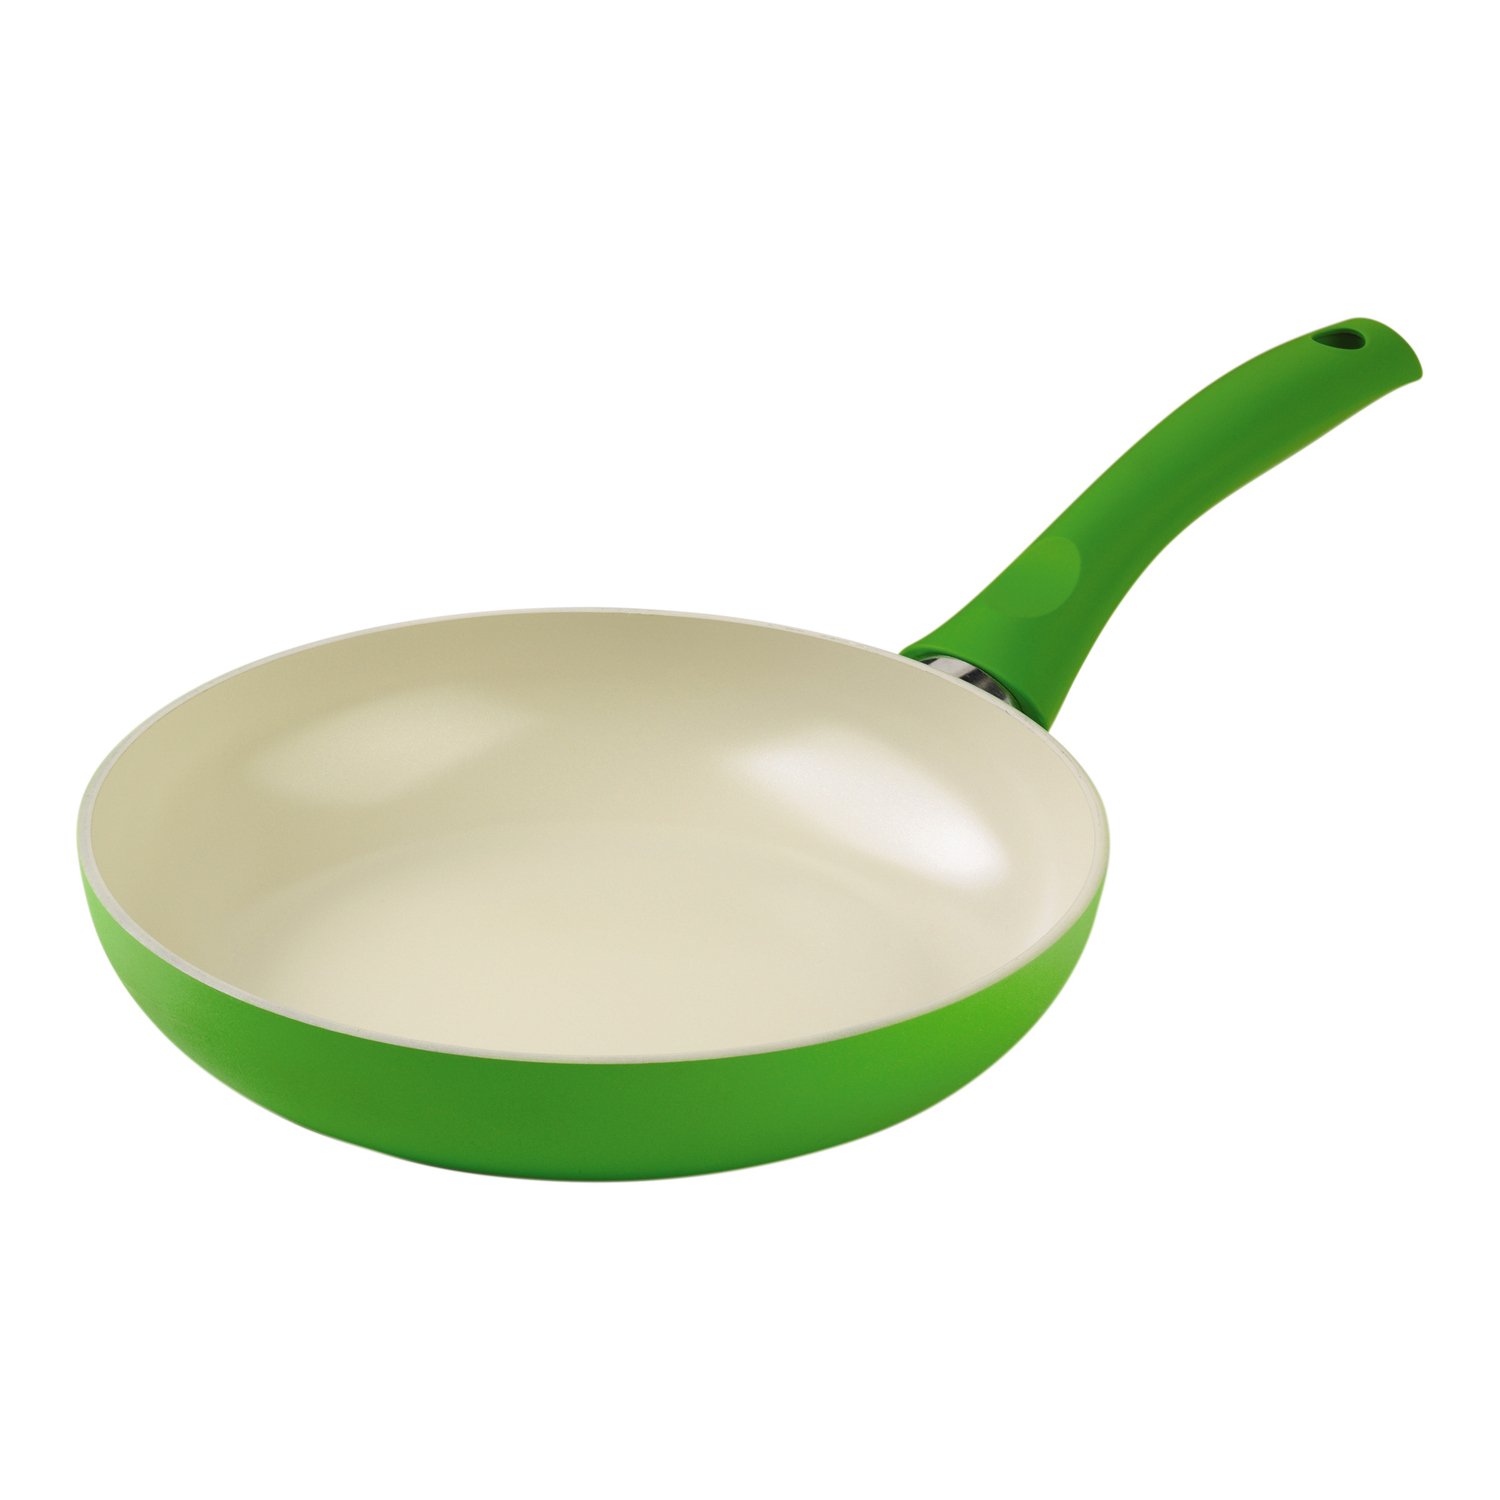 Kuhn Rikon Colori Cucina 28 Cm Ceramic Induction Frying Pan, Green